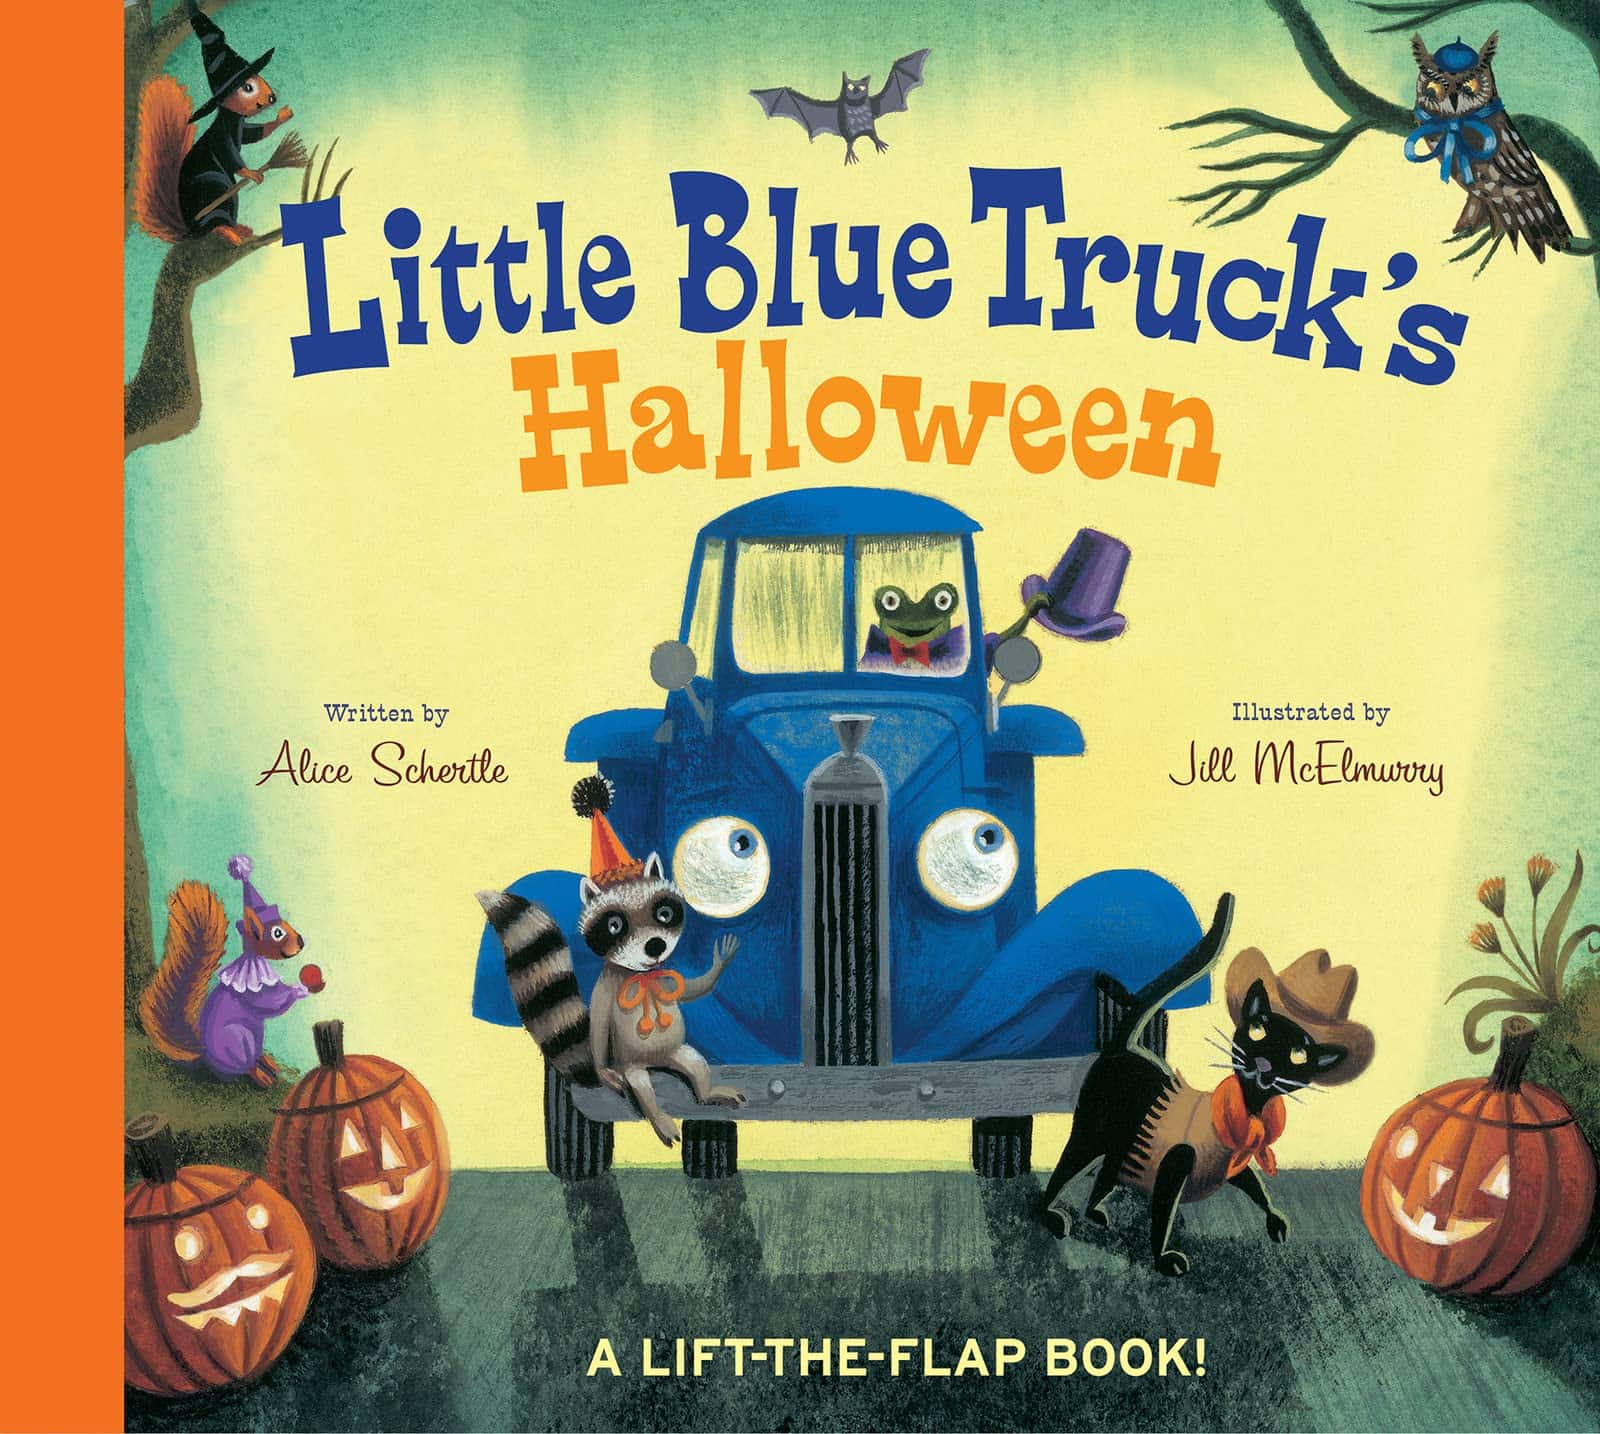 "Little Blue Truck's Halloween" by Alice Schertle